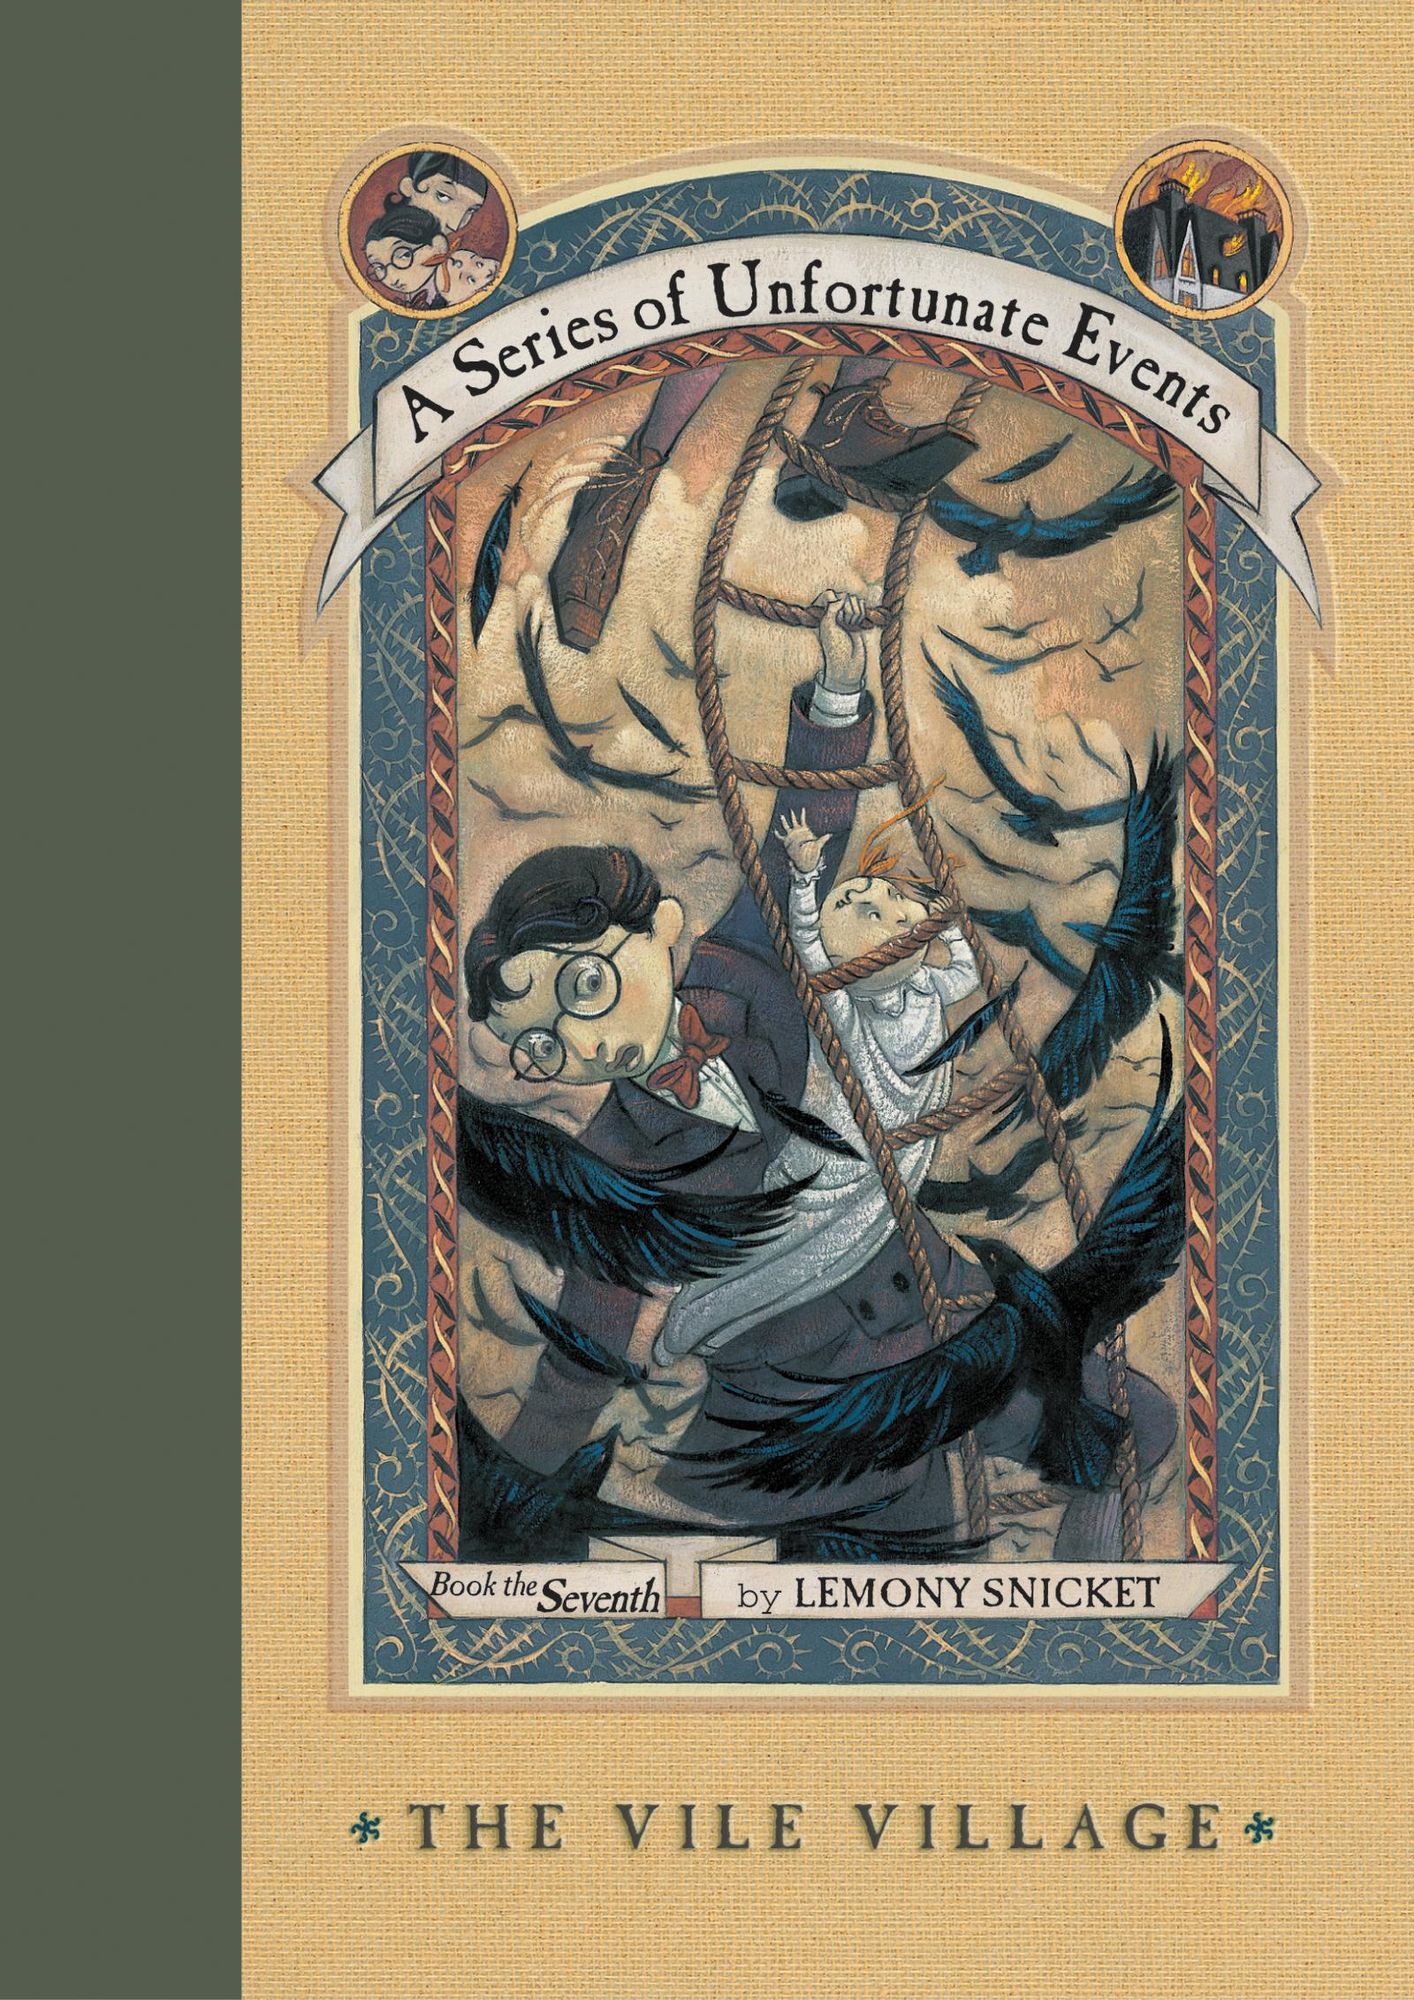 Events　Vile　von　#7:　Unfortunate　of　Snicket'　A　eBook　Village'　Series　The　'Lemony